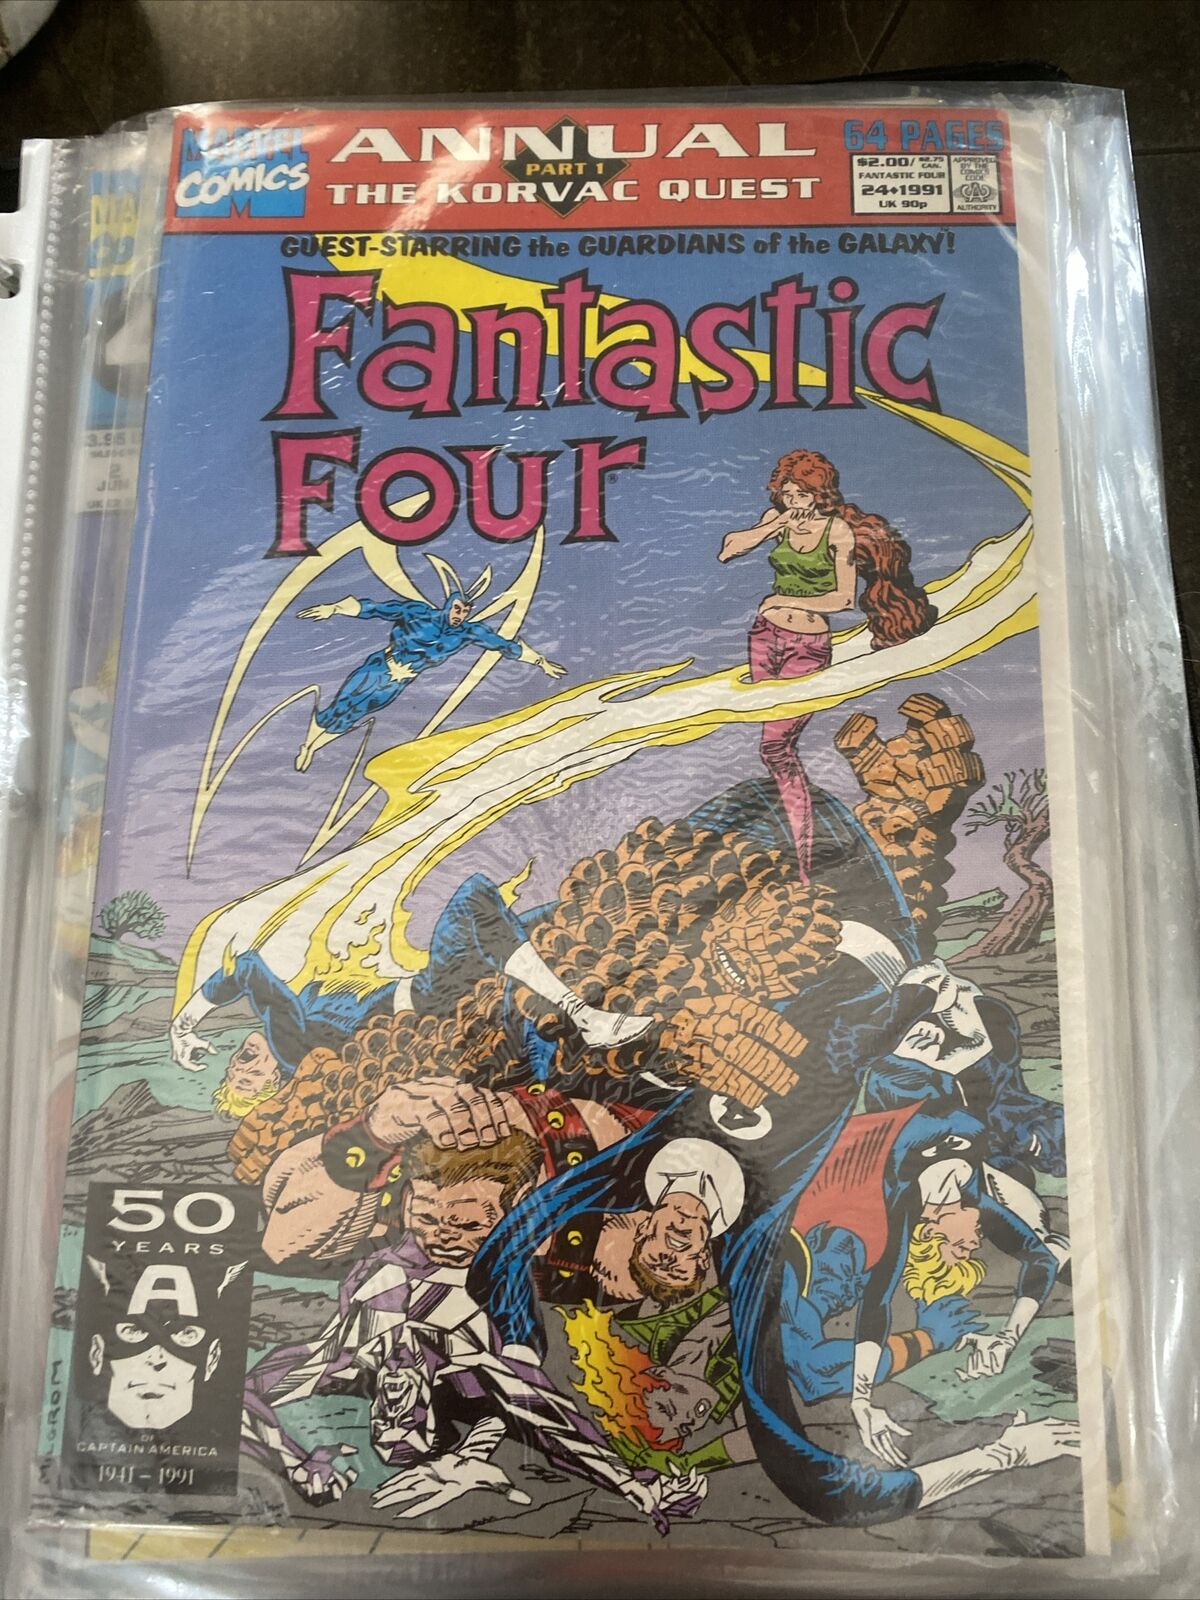 Fantastic Four Annual Vol.1 #24 - 1991 The Korvac Quest Part 1 Marvel Comic Book